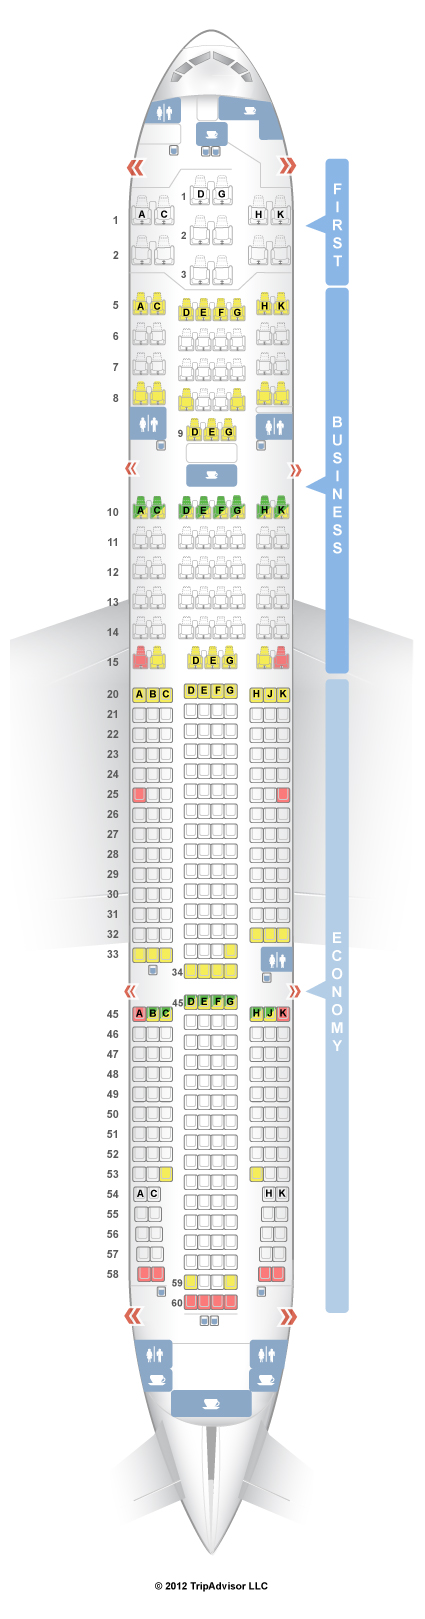 Jal Flight 9 Seating Chart